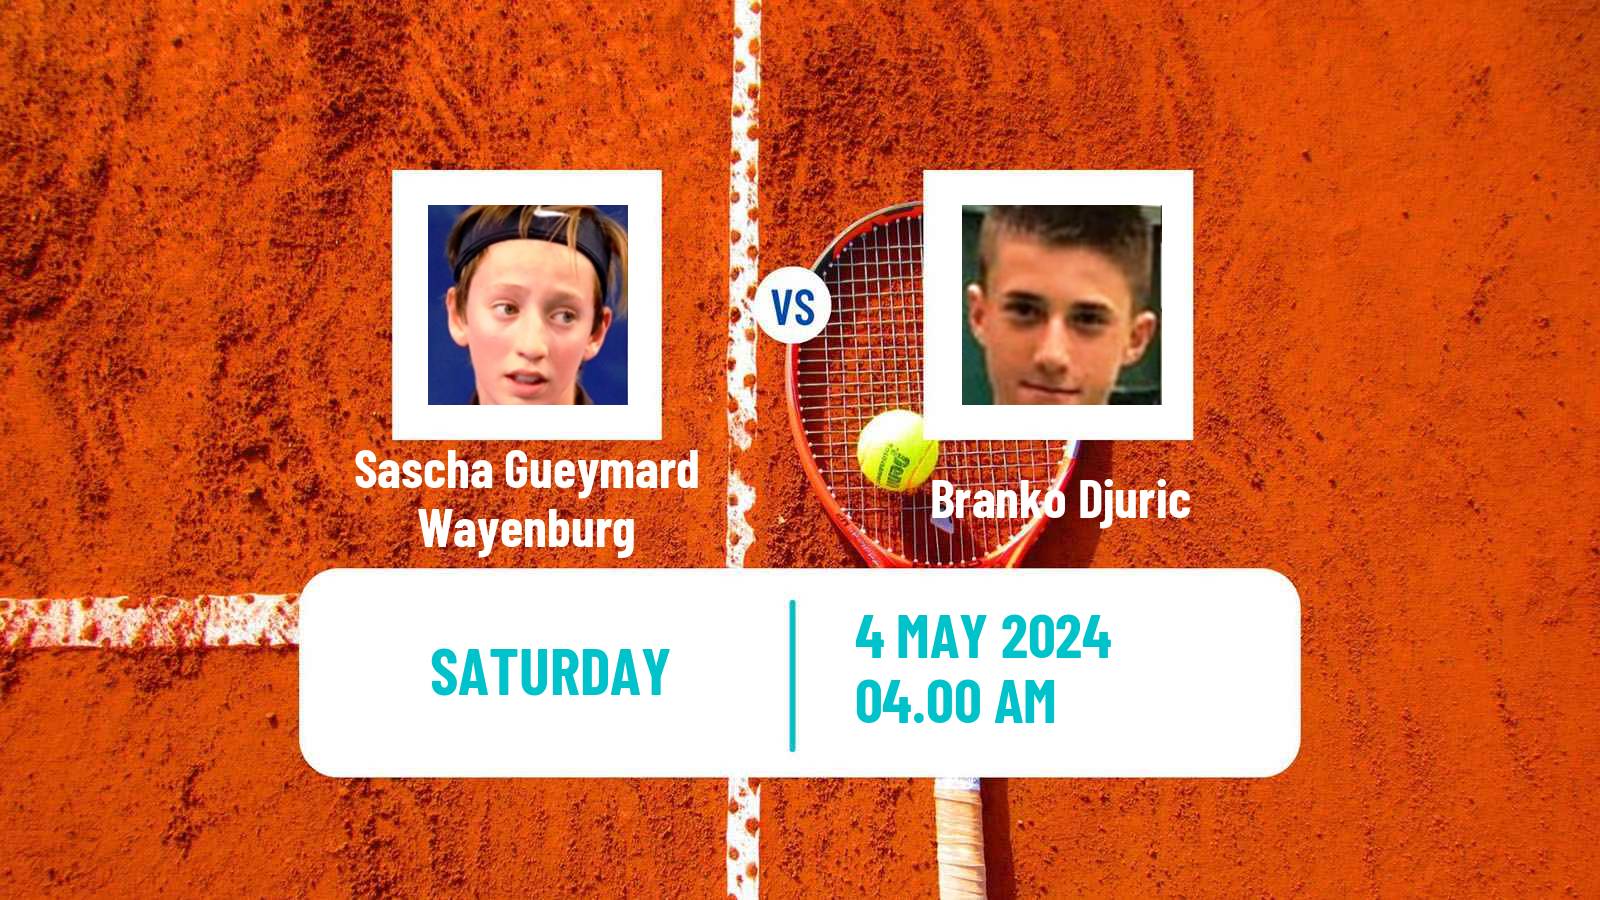 Tennis ITF M15 Kursumlijska Banja 3 Men Sascha Gueymard Wayenburg - Branko Djuric